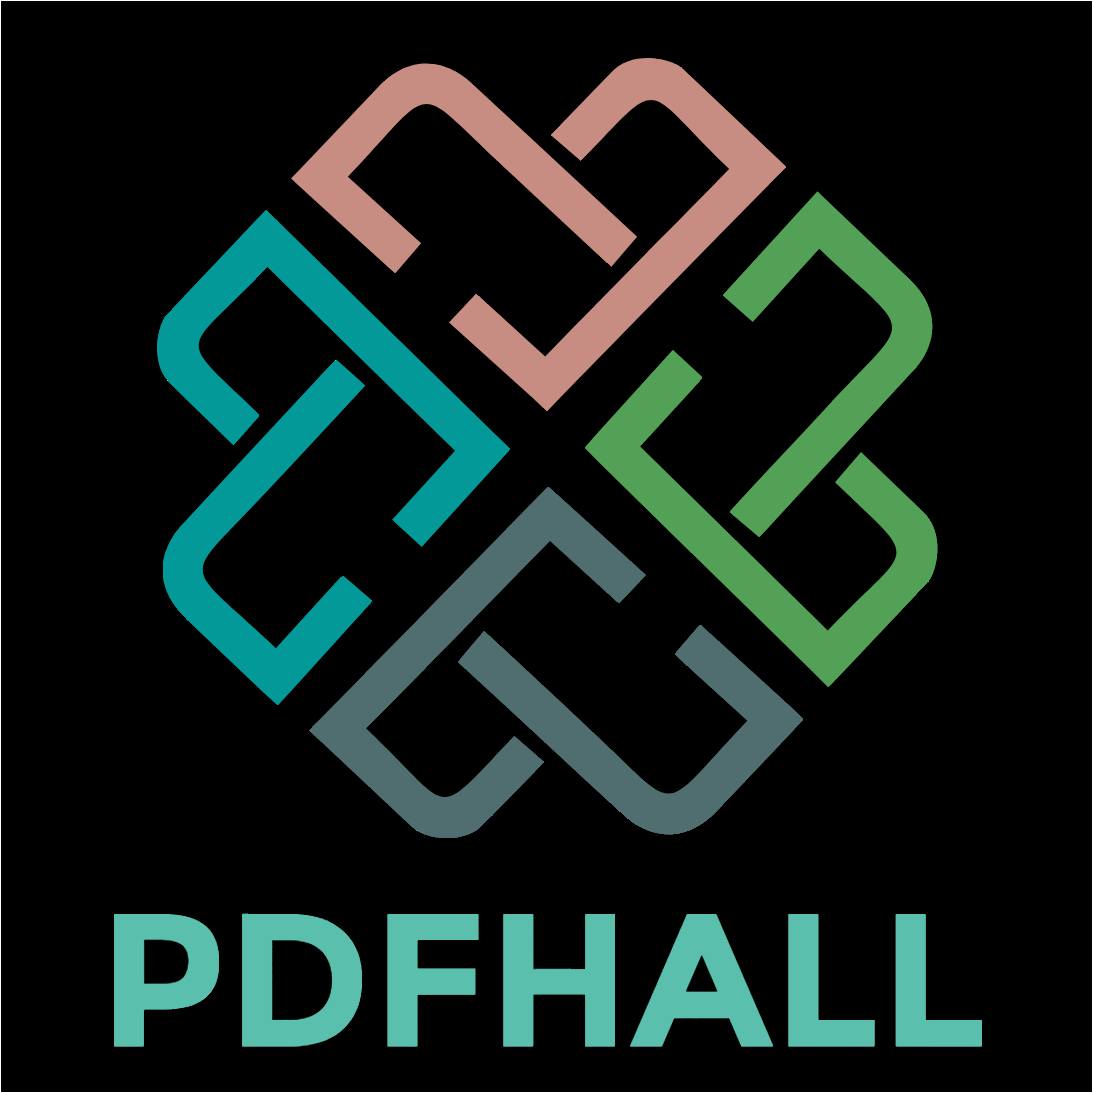 pdfhall logo png